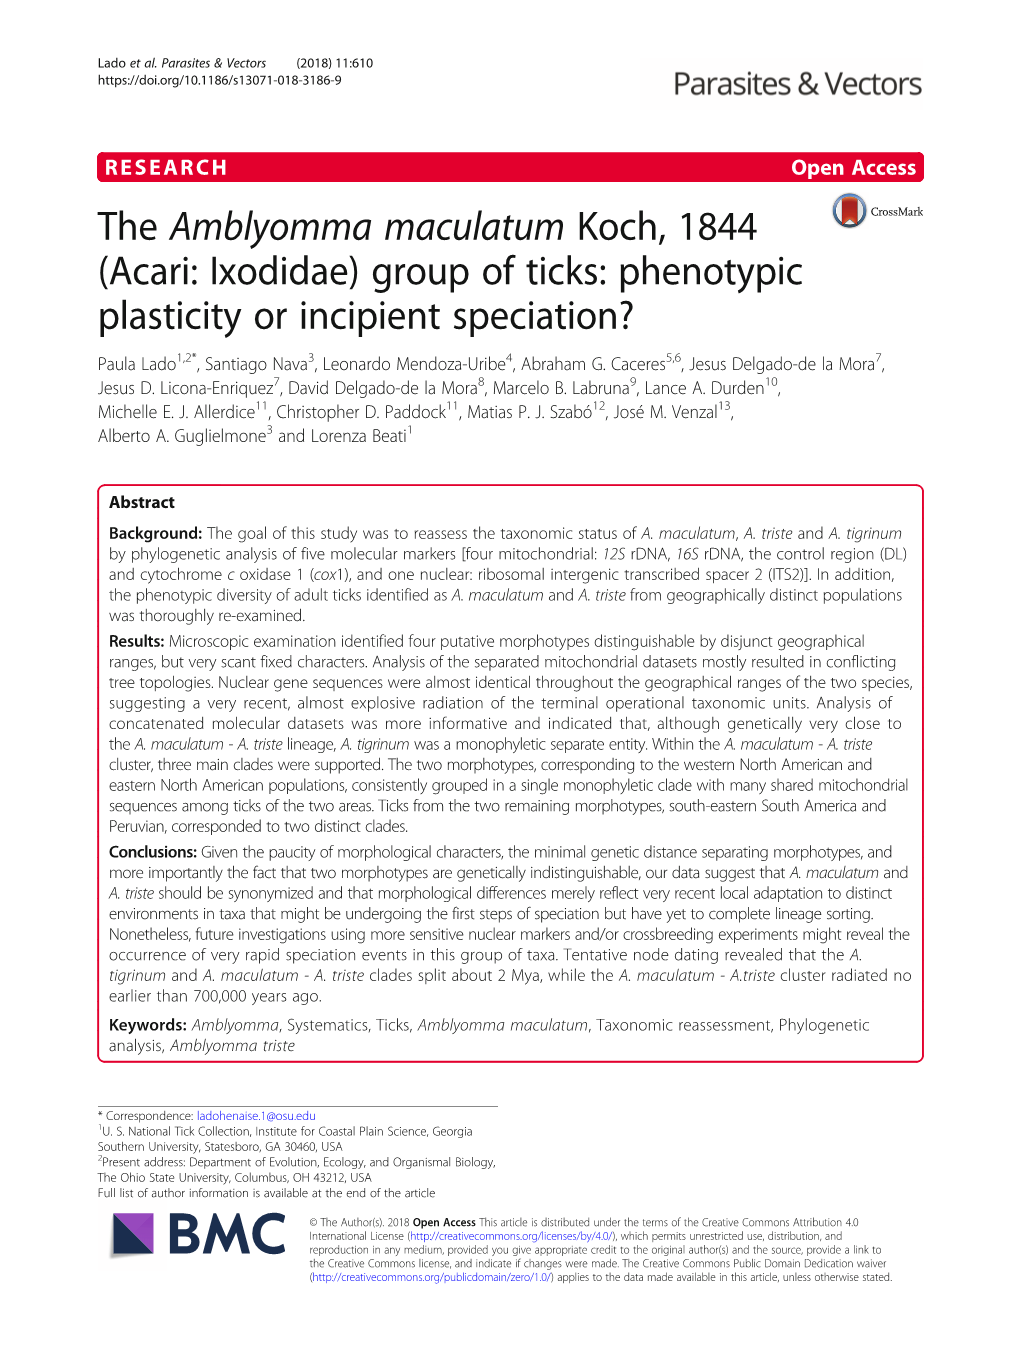 The Amblyomma Maculatum Koch, 1844 (Acari